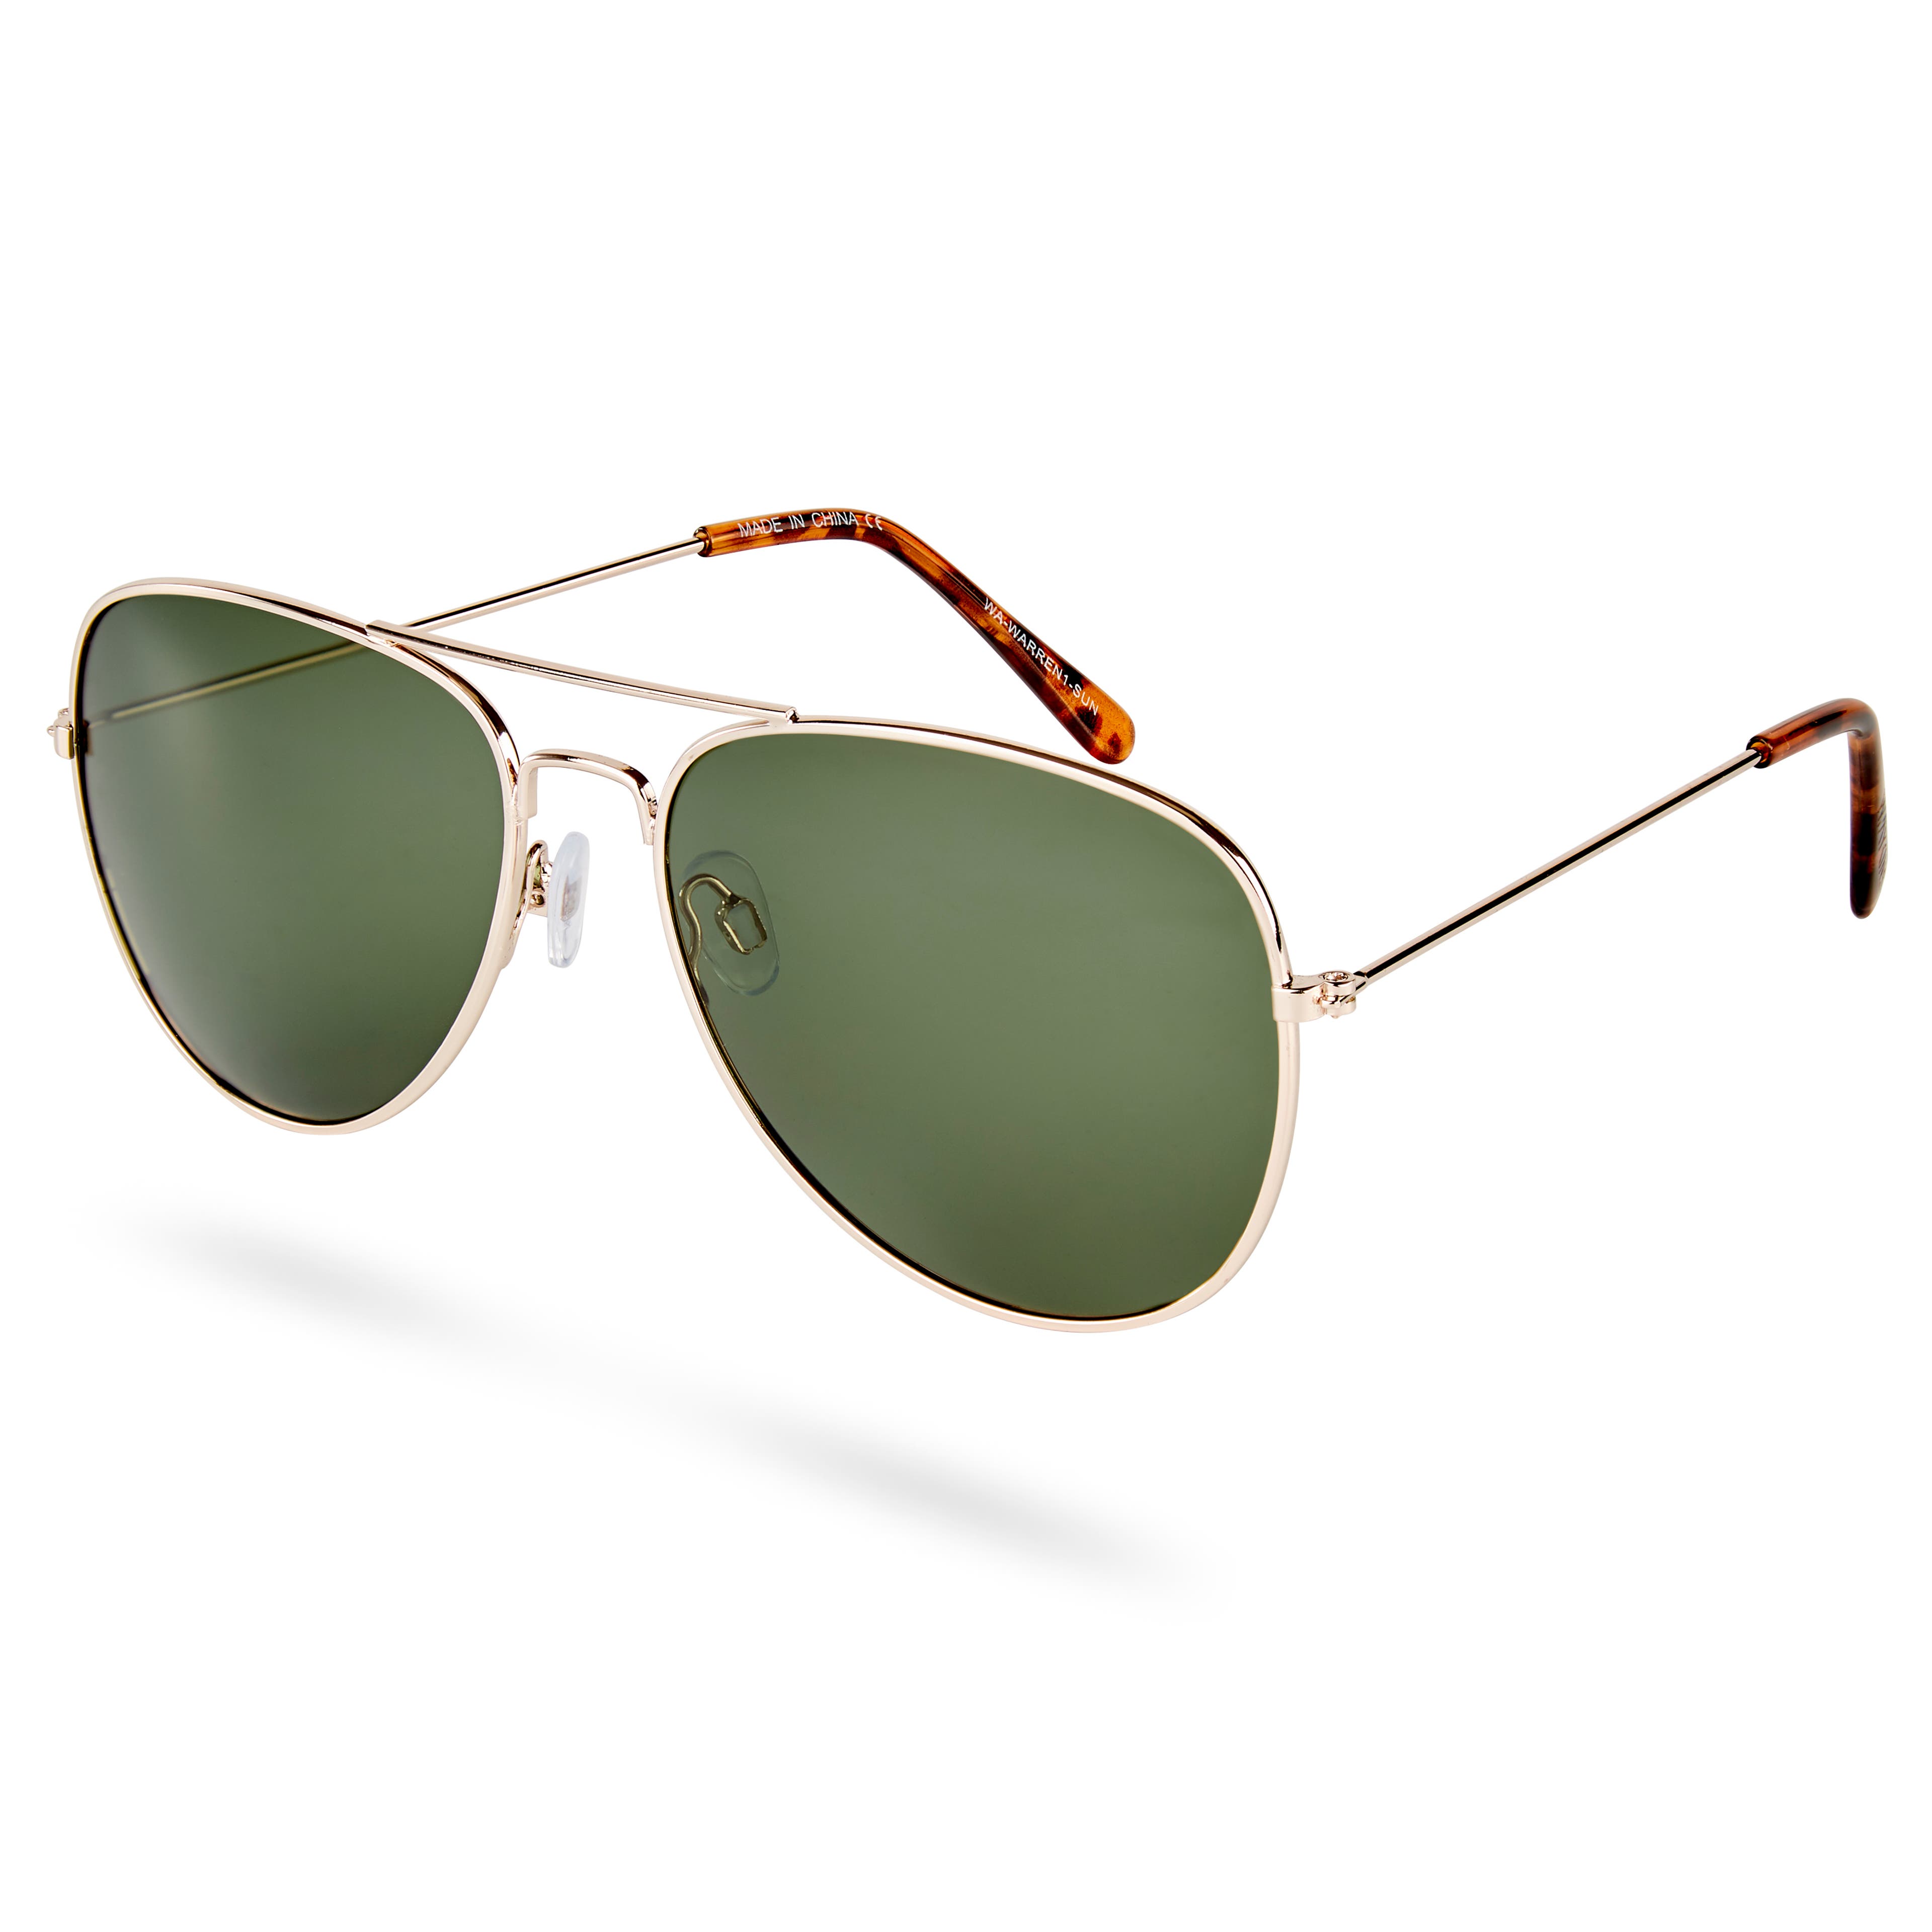 Vista | Gold-Tone & Olive Green Aviator Sunglasses